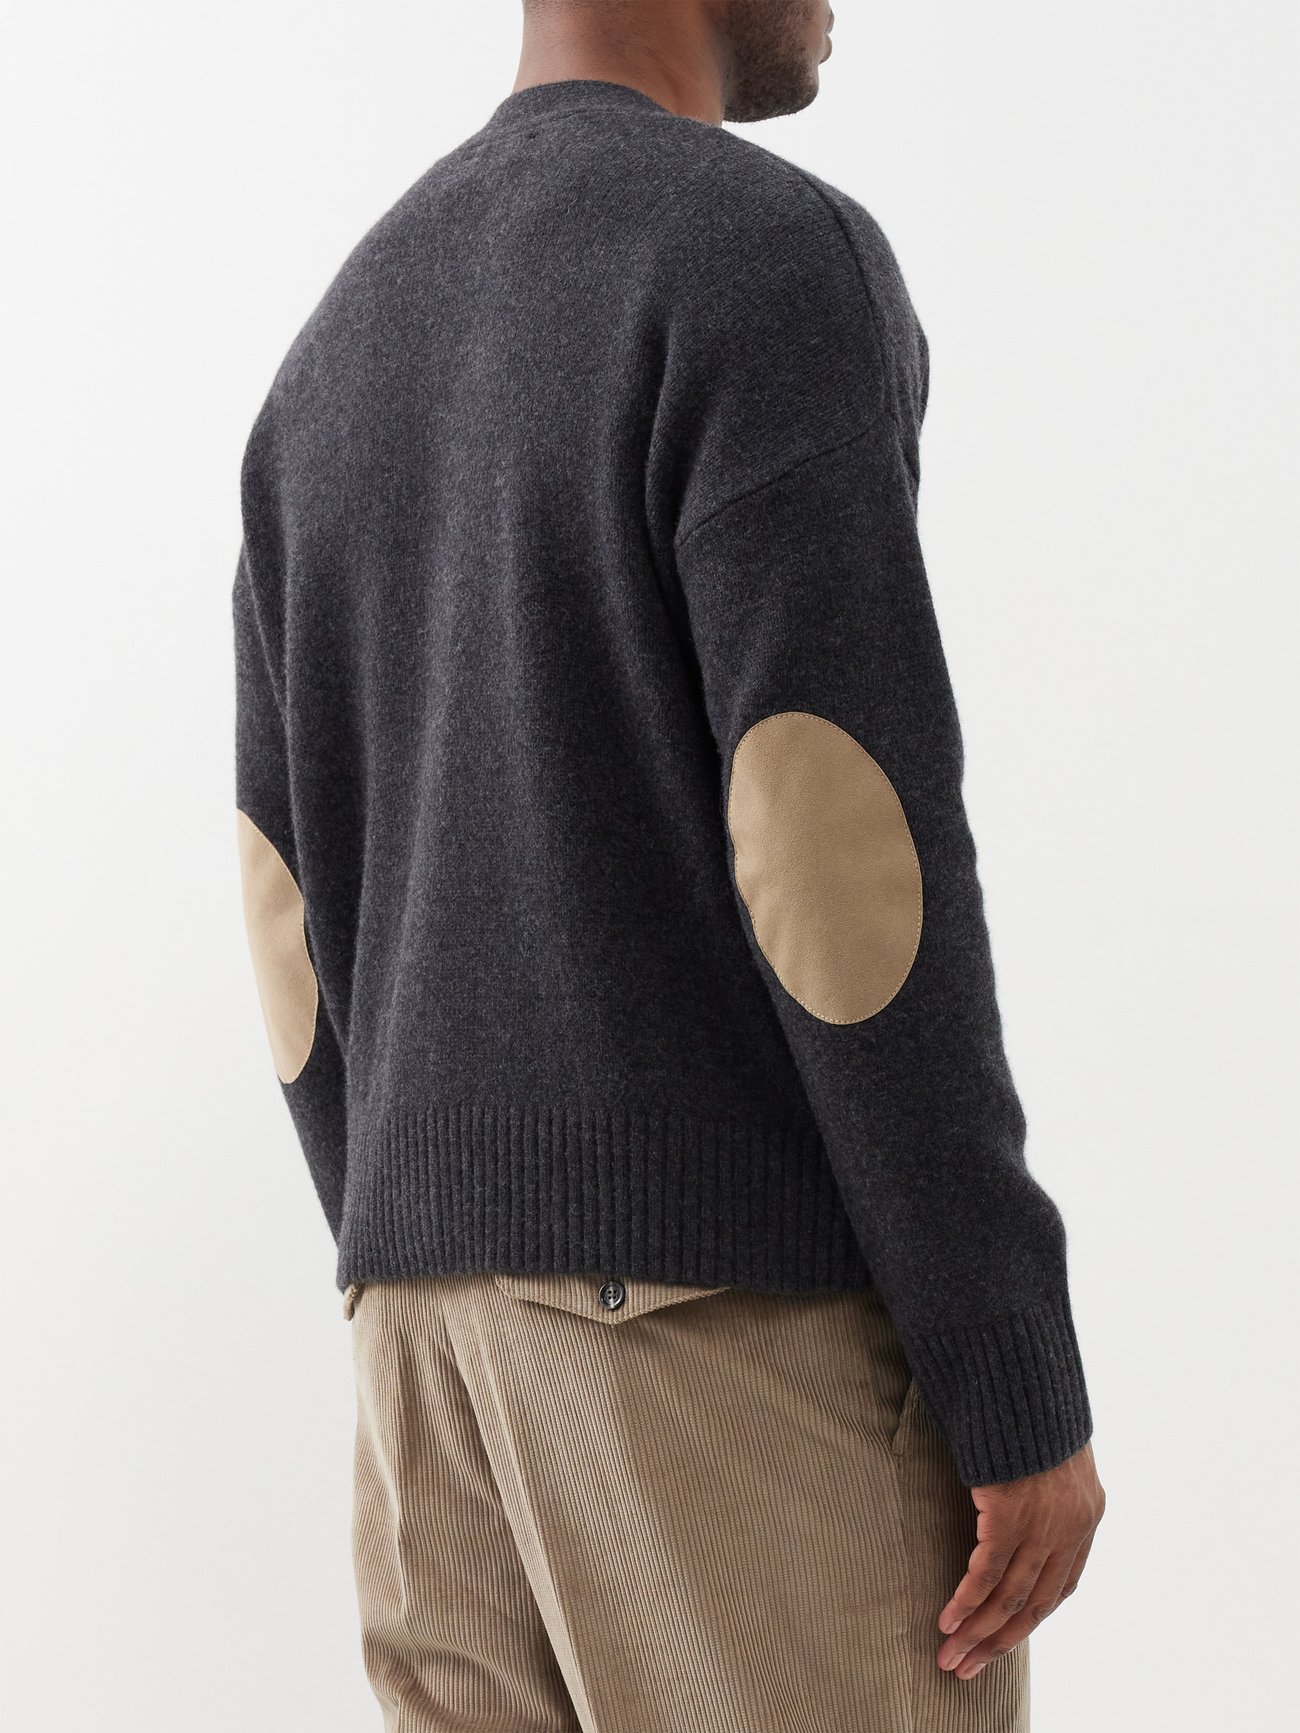 HSMQHJWE Men'S Sweater Elbow Patches Mens Woolen Sweater Mens